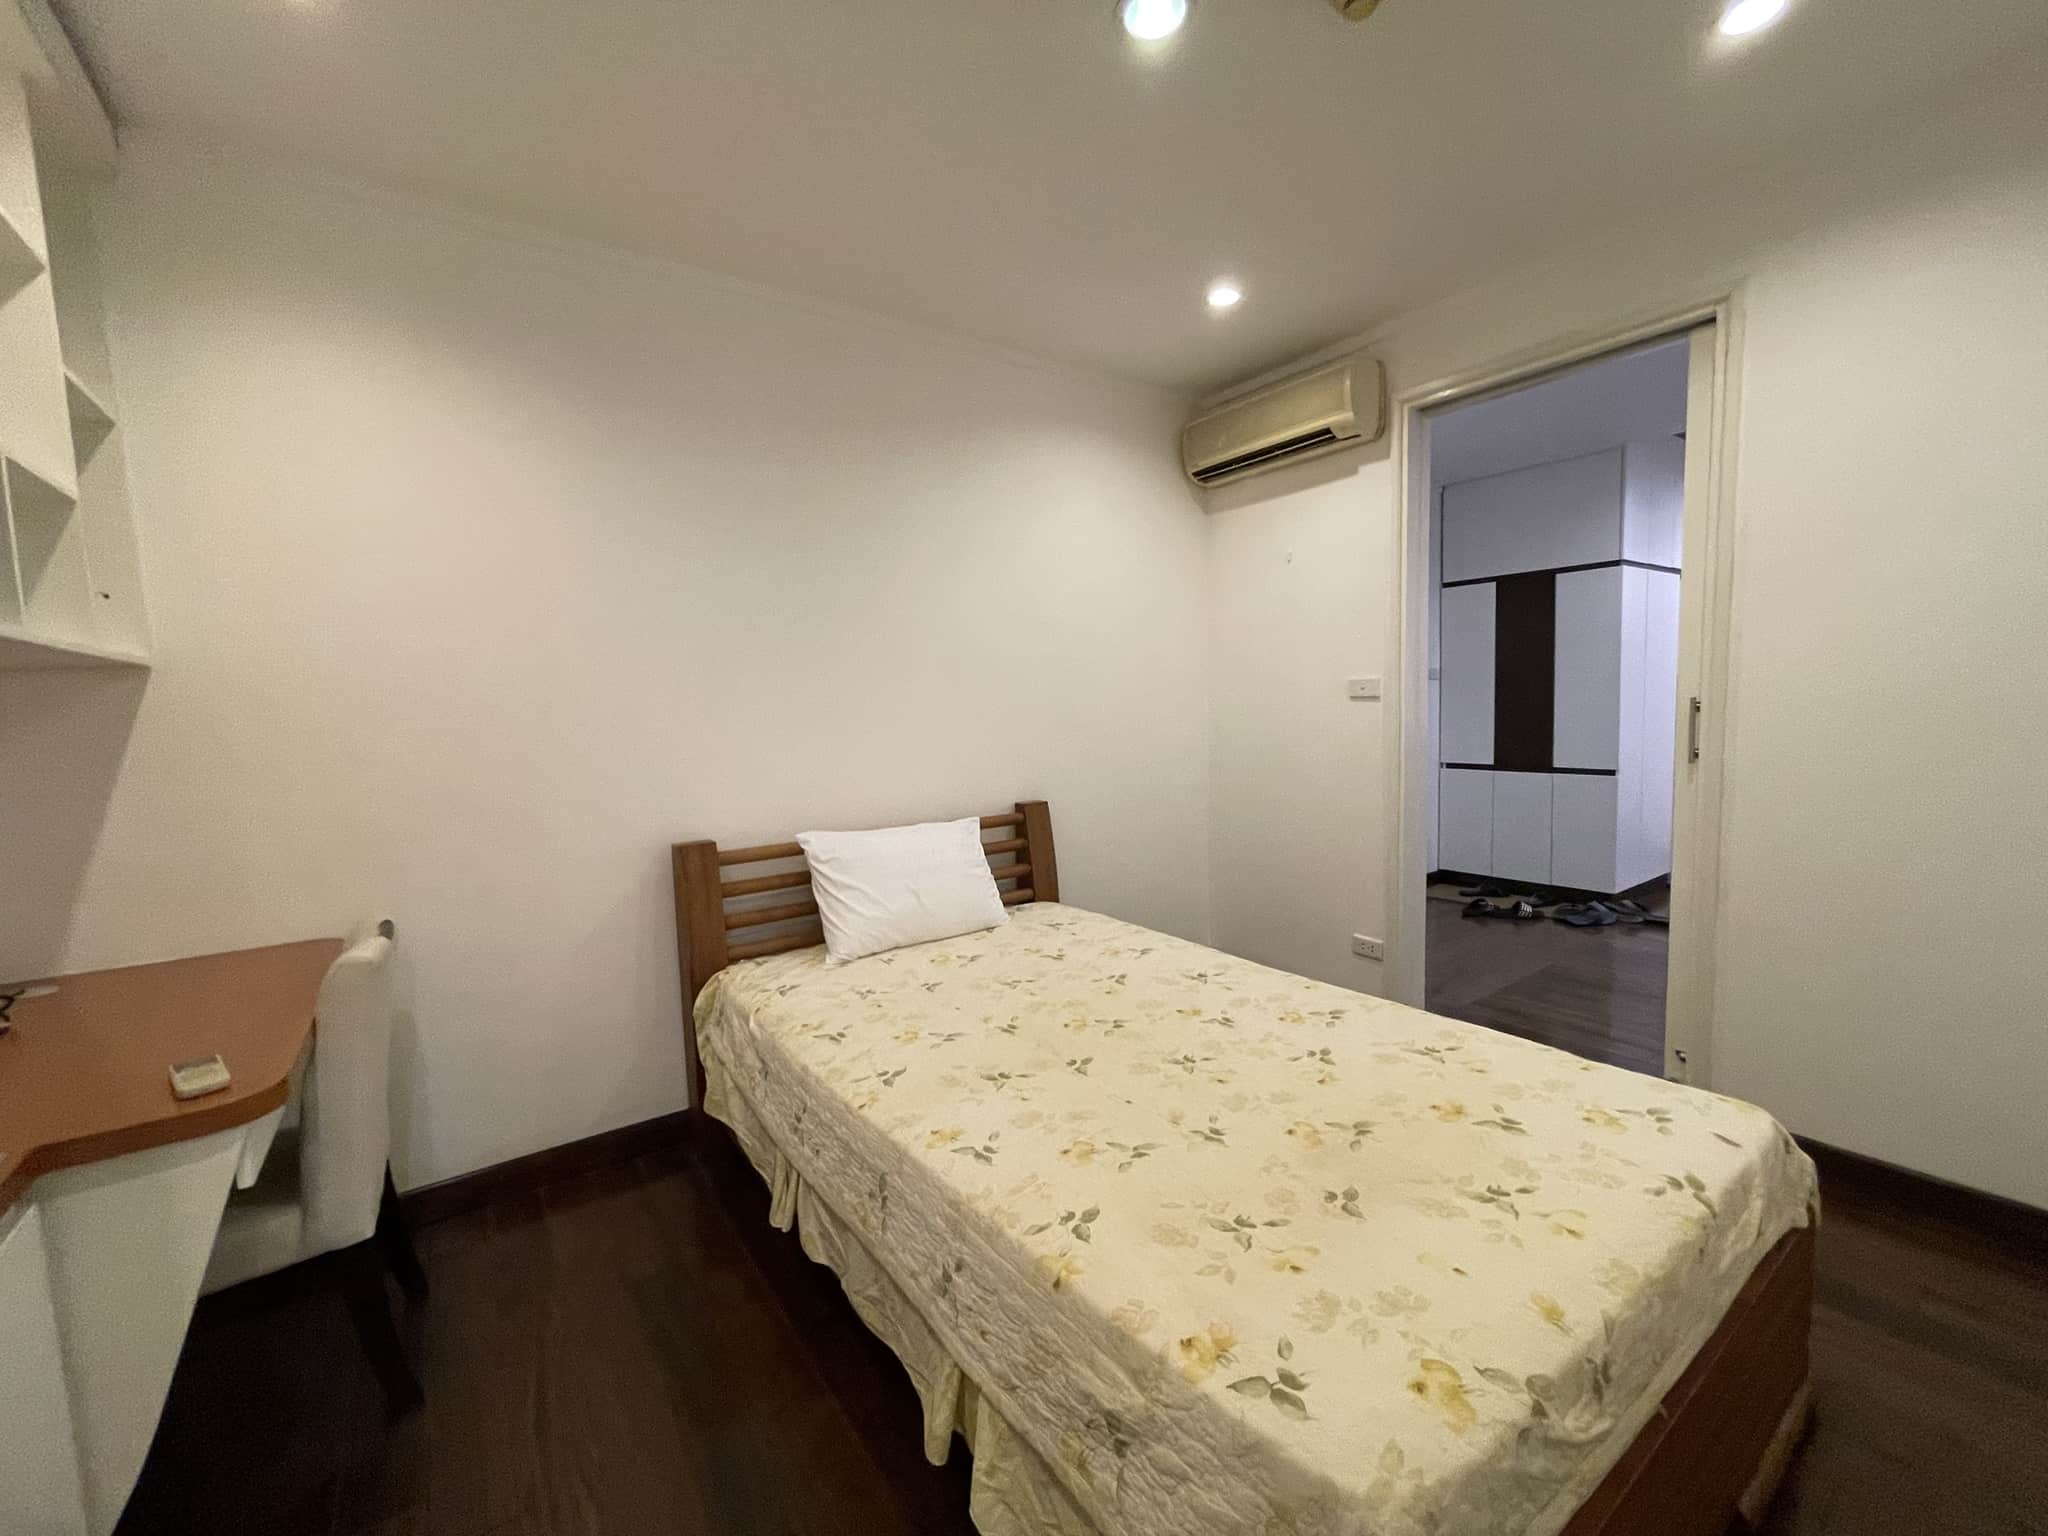 Glamorous 3-bedroom apartment in G3 Ciputra for rent 8